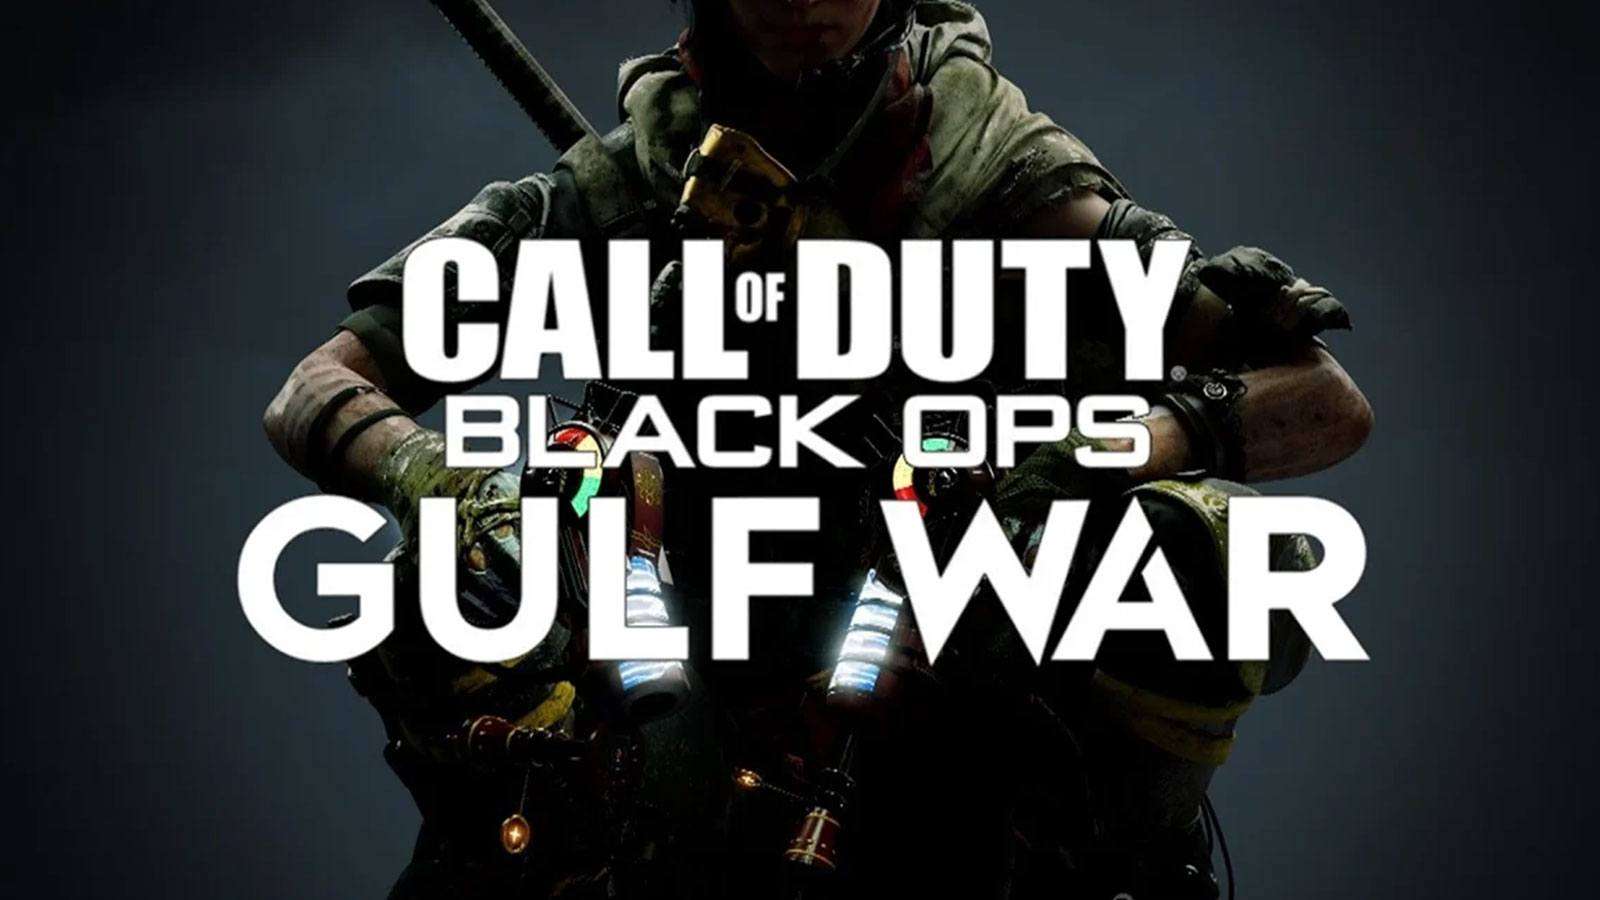 Black Ops Gulf War